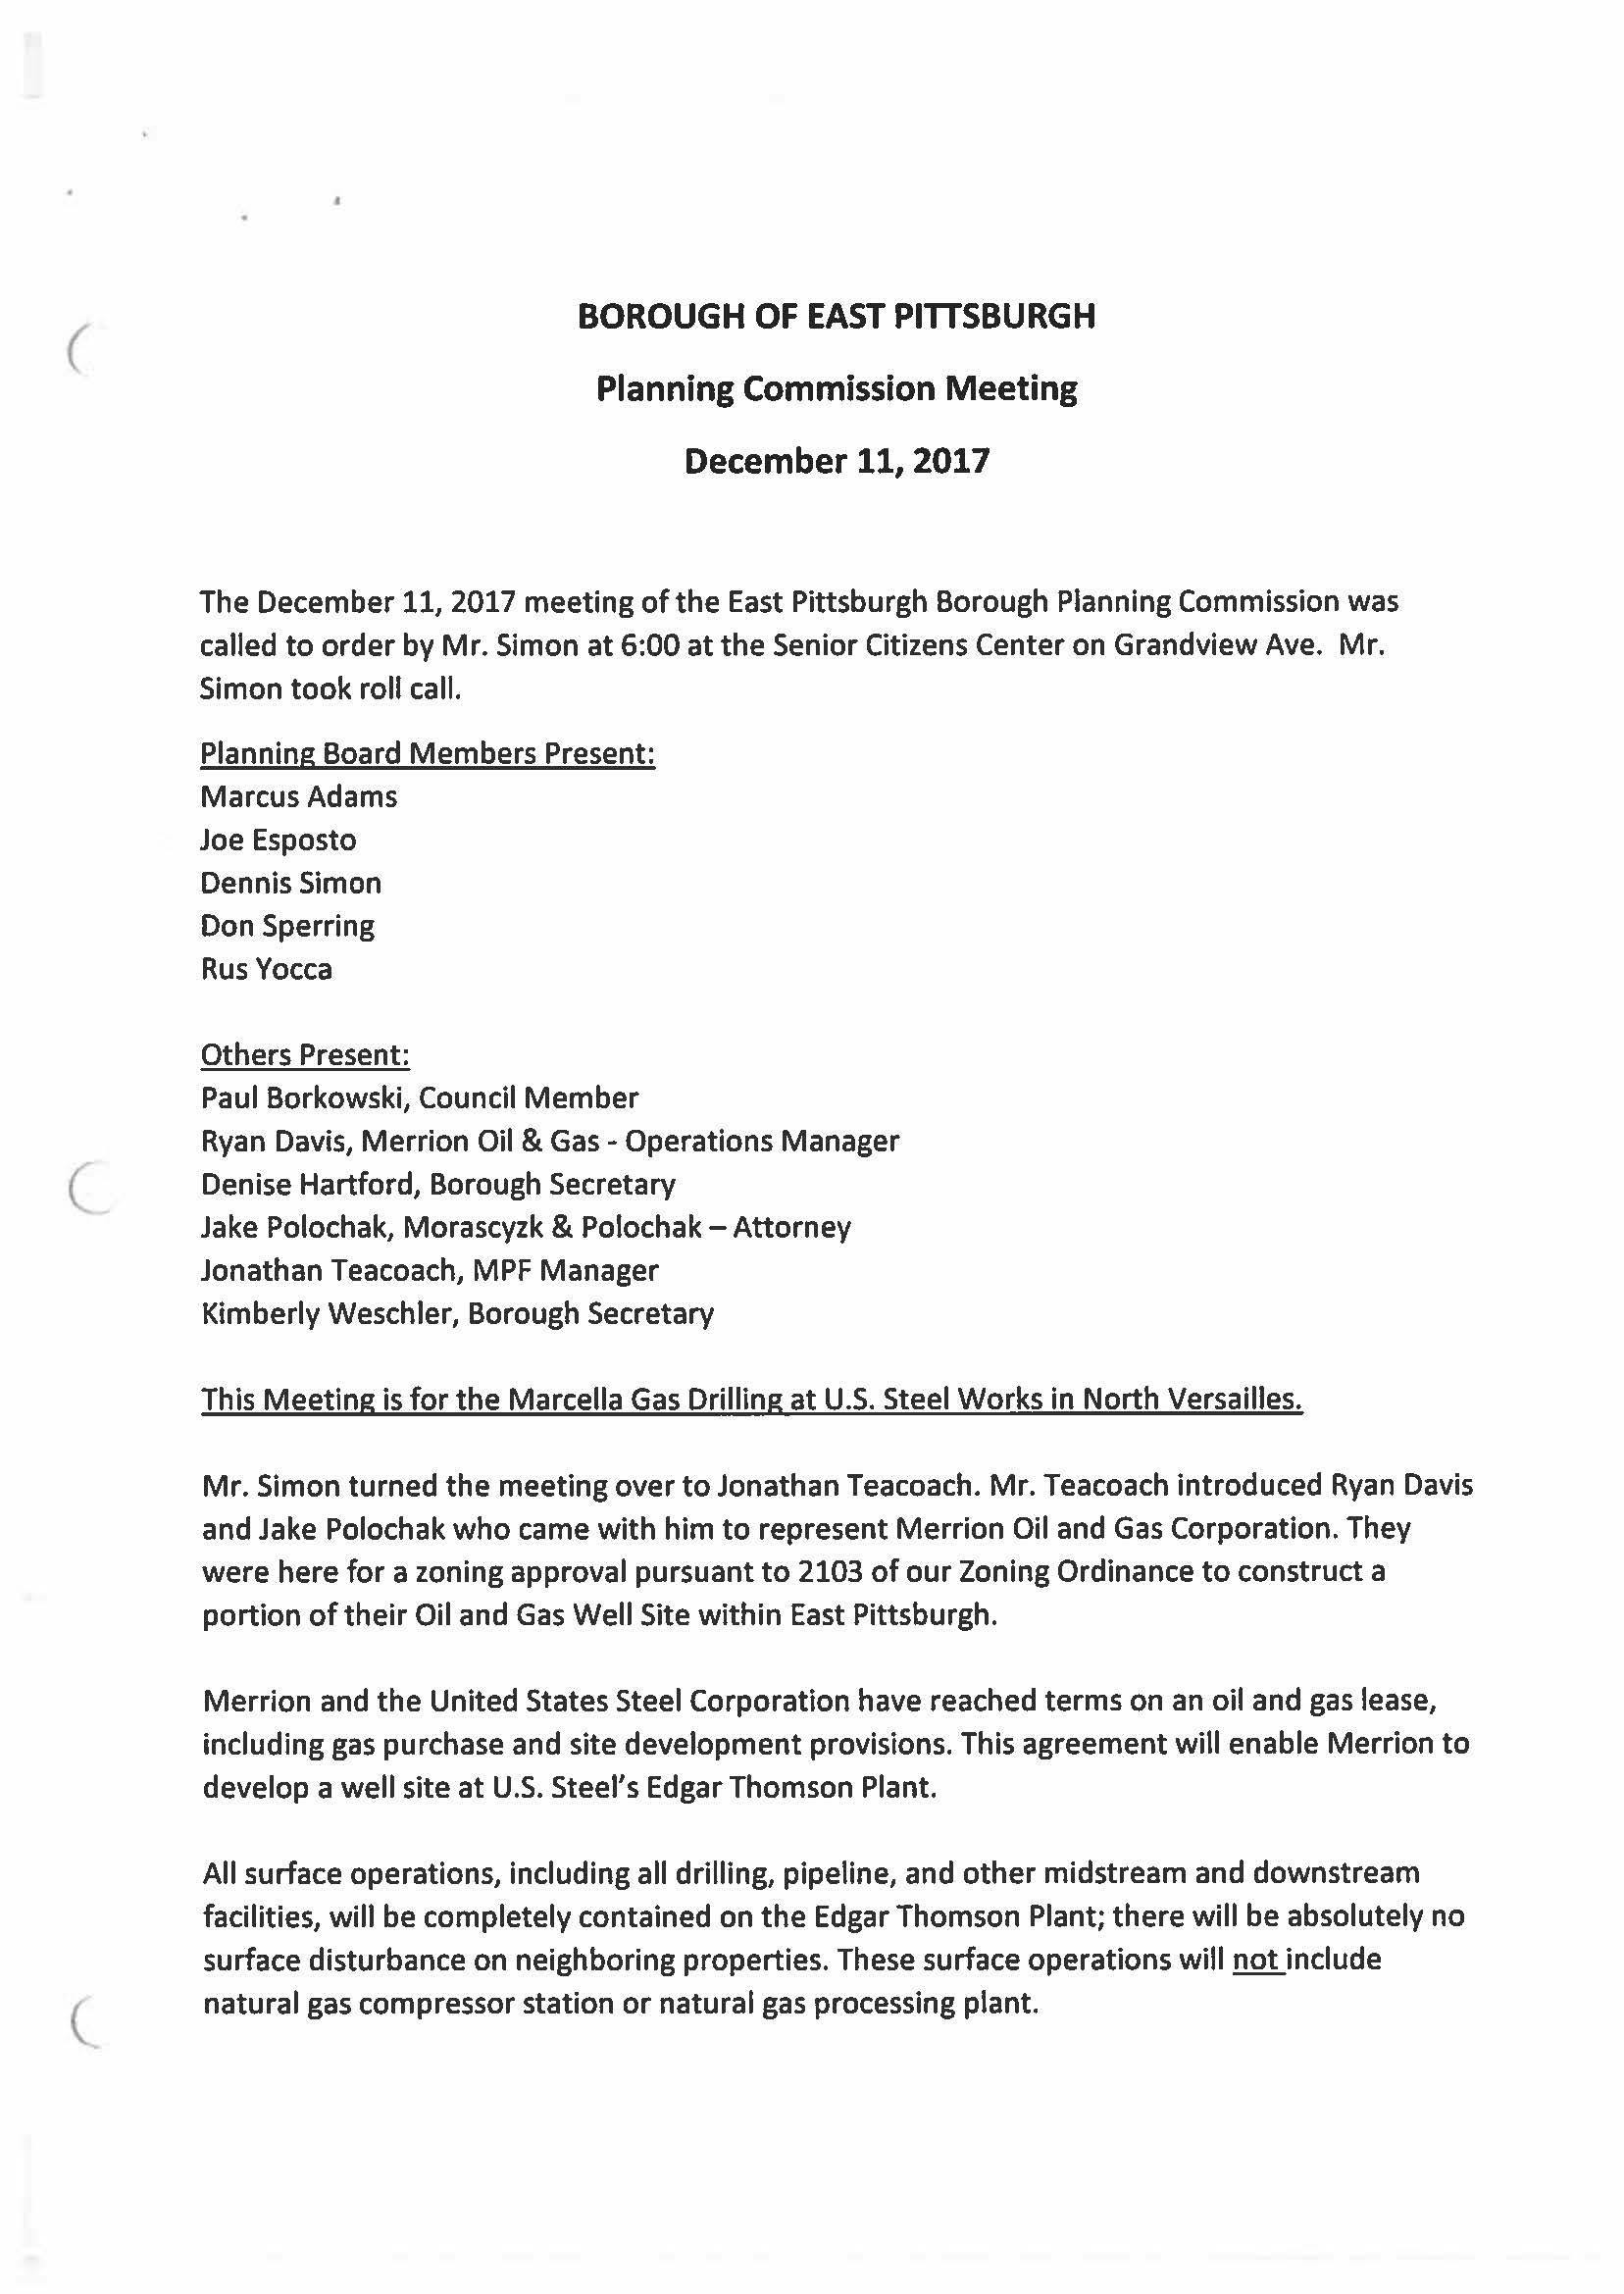 East Pittsburgh Borough Meeting Minutes: 12-11-17